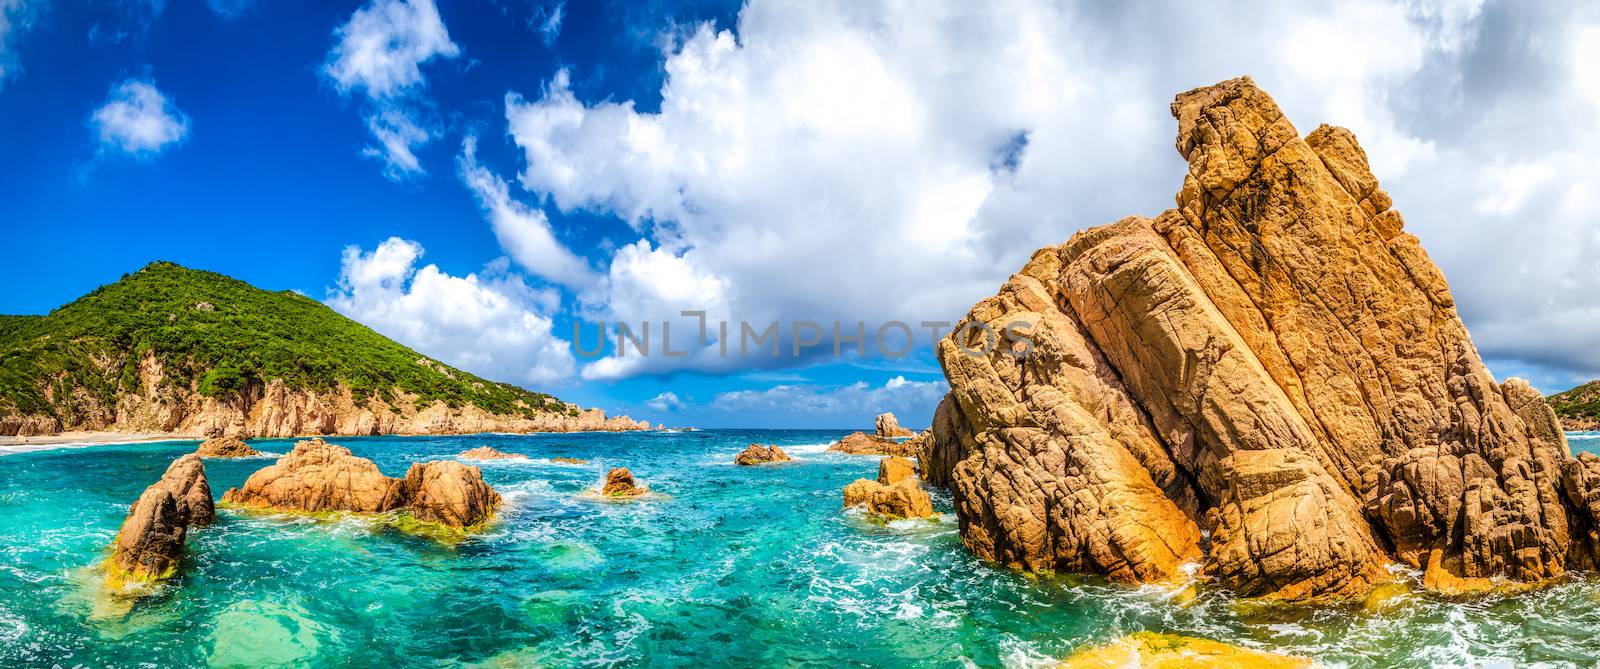 Ocean coastline scenic panoramic view in Costa Paradiso, Sardini by martinm303